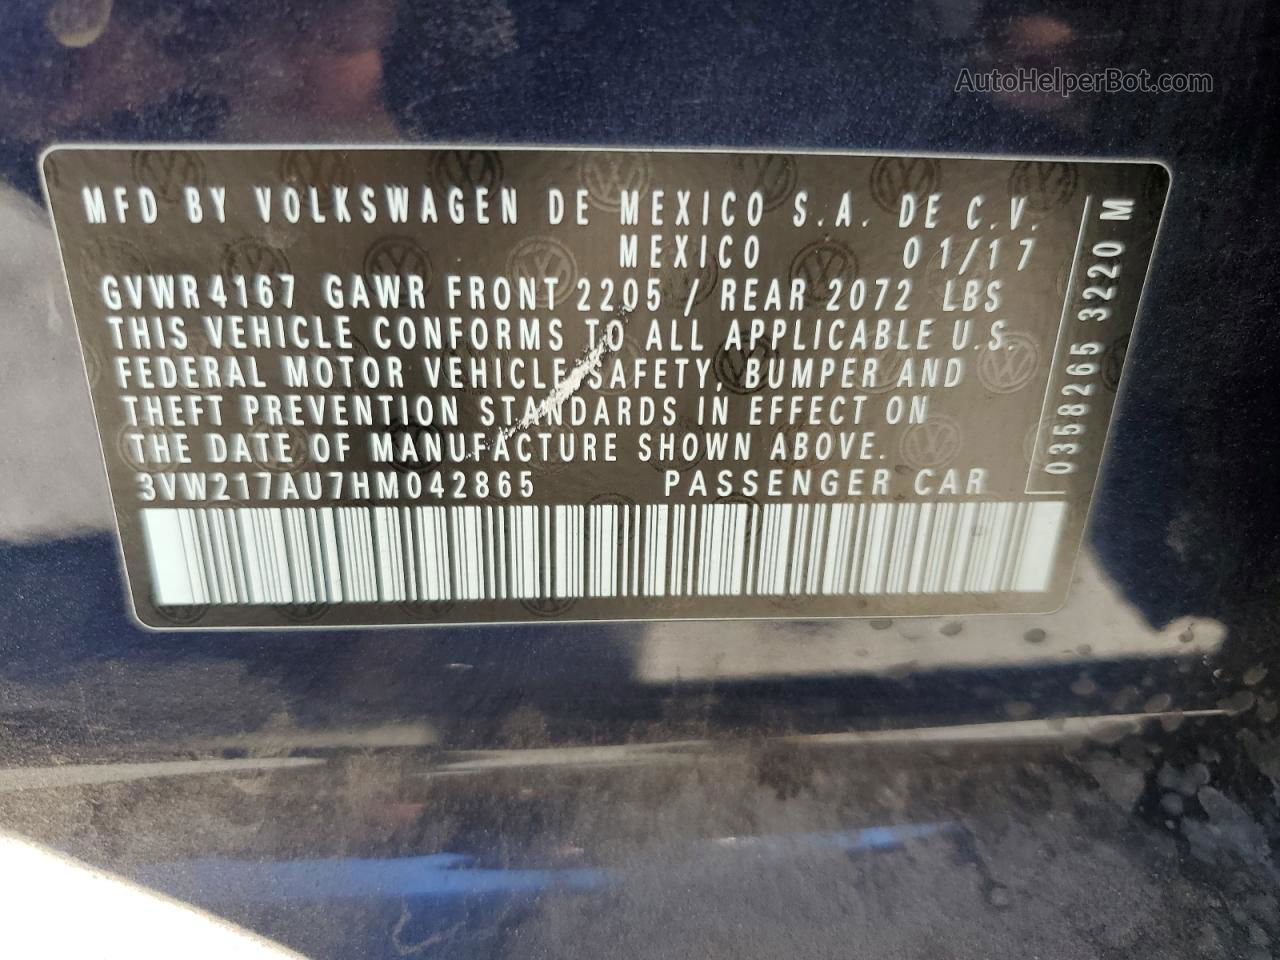 2017 Volkswagen Golf S Blue vin: 3VW217AU7HM042865